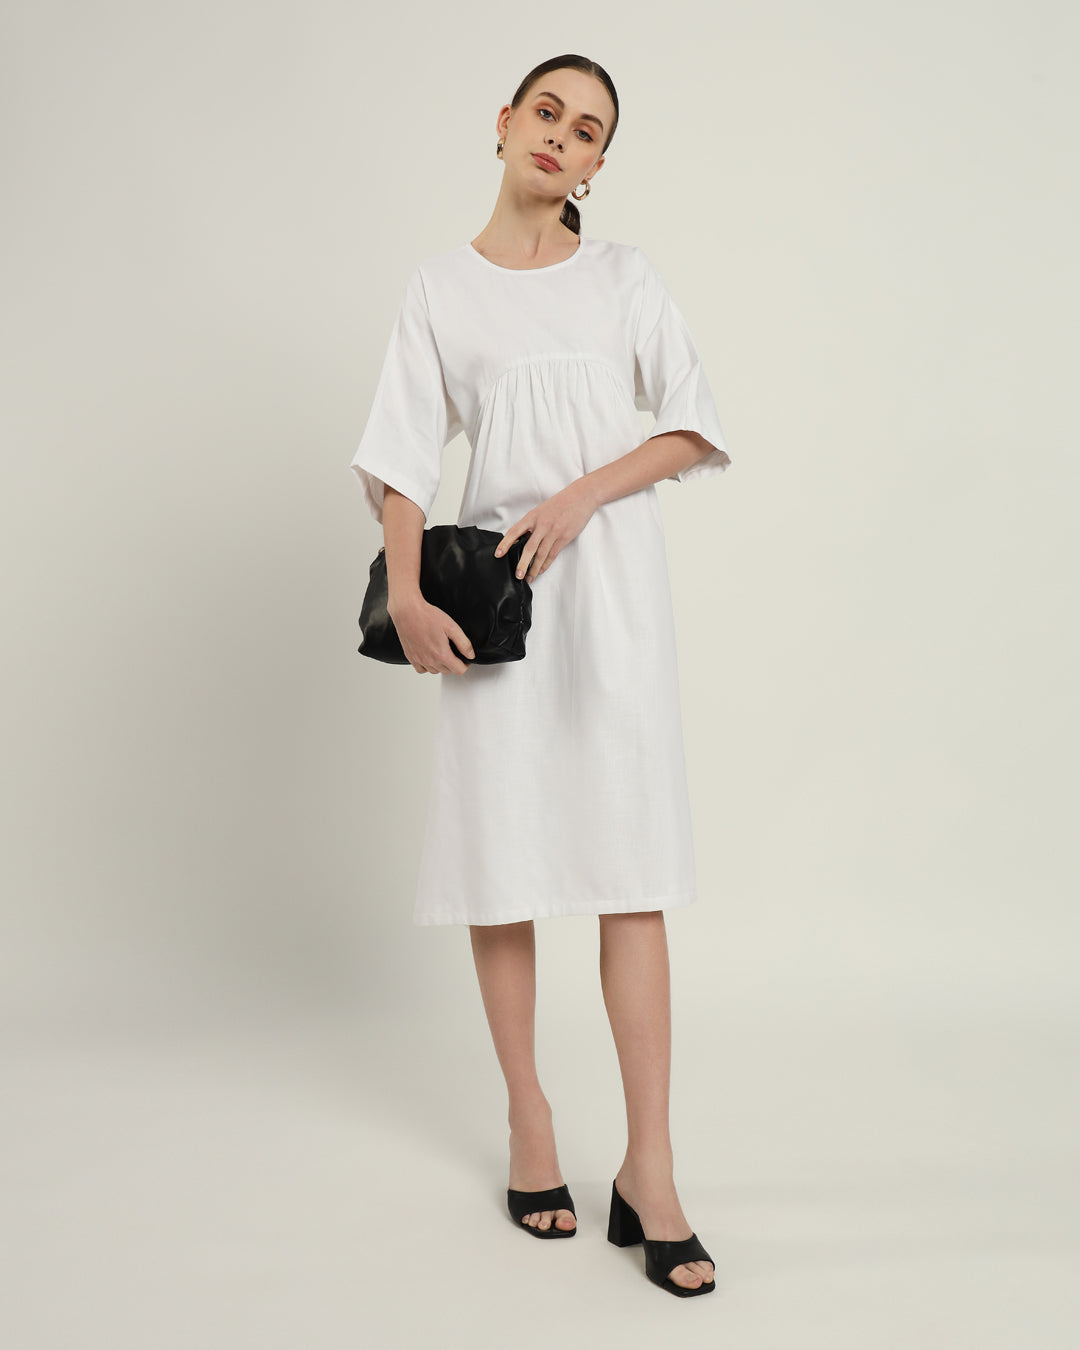 The Monrovia Daisy White Linen Dress